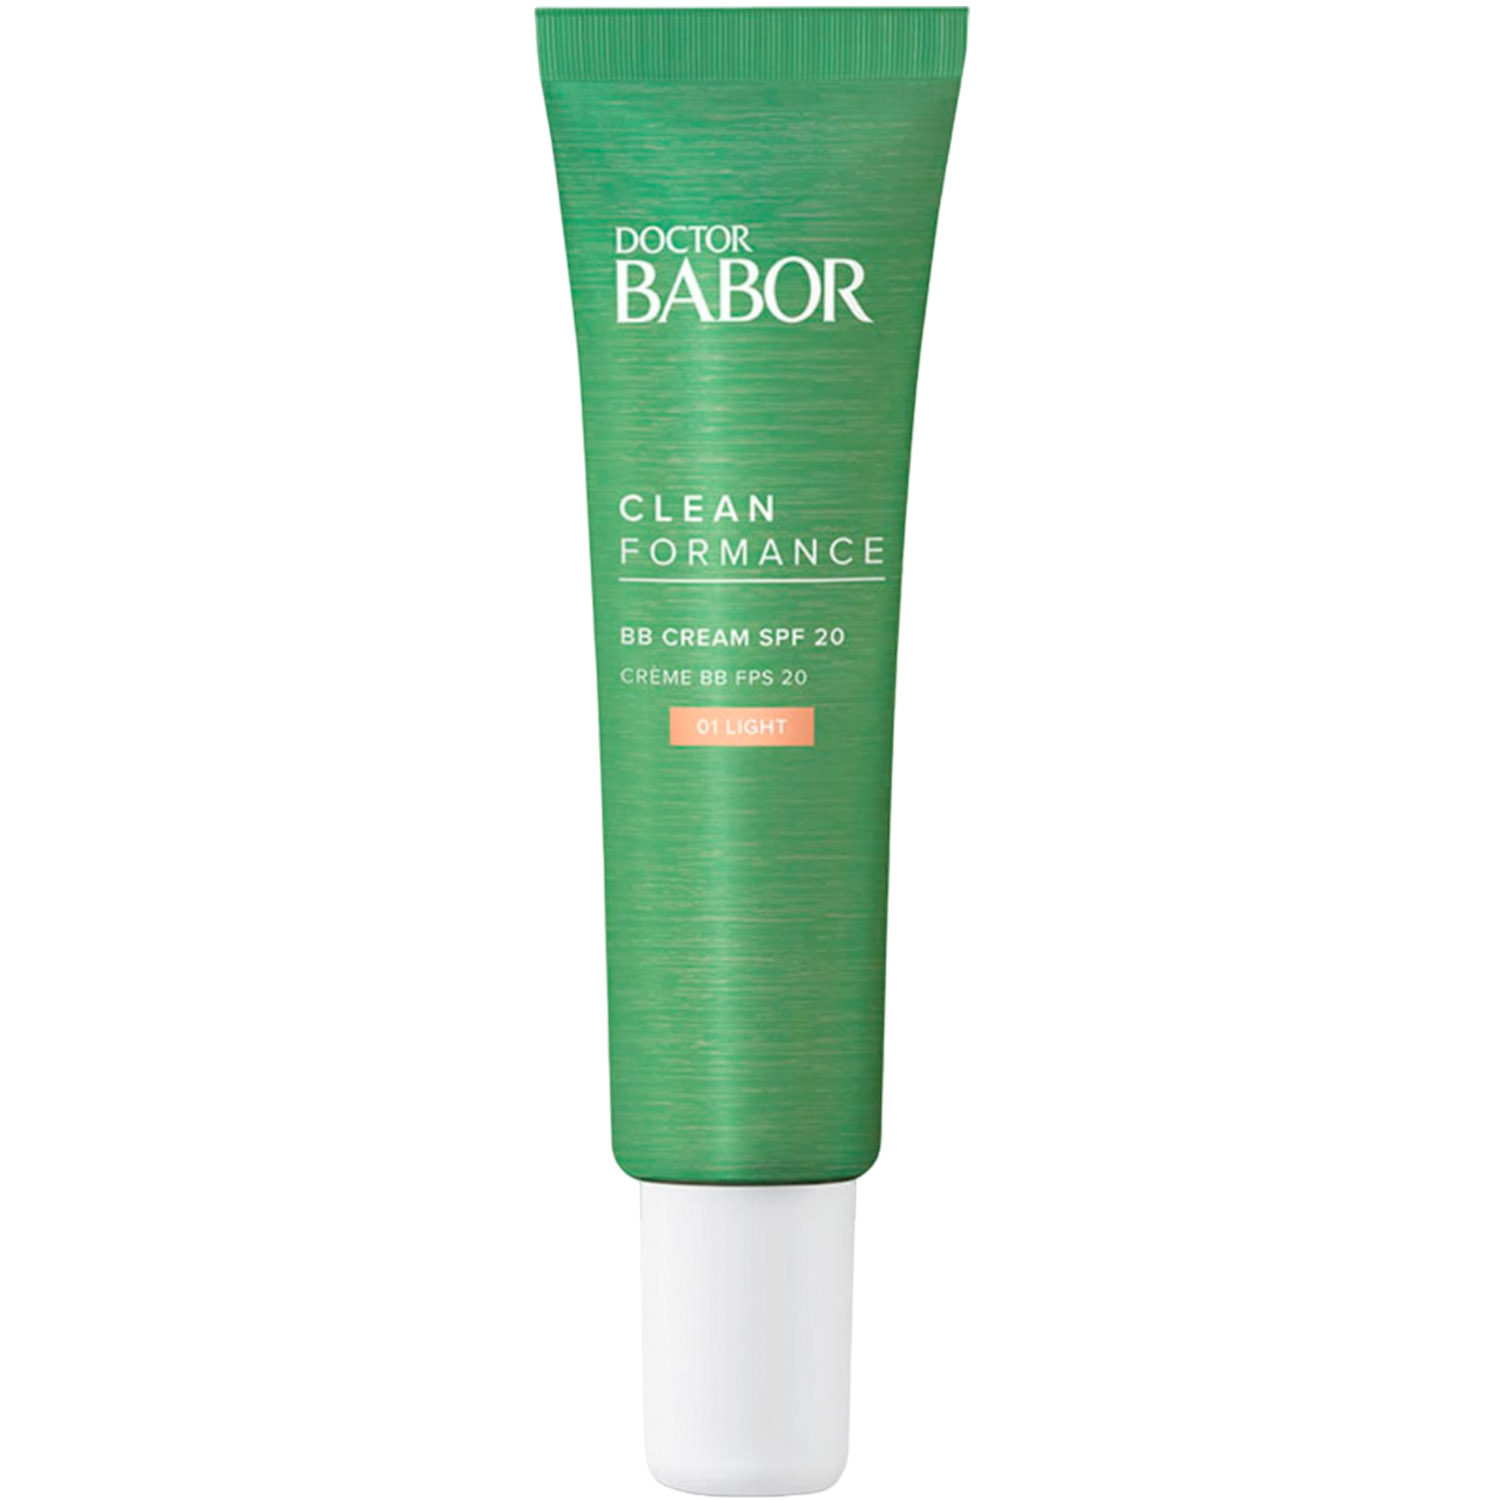 ВВ-крем для обличчя Babor Doctor Babor Clean Formance BB Cream SPF 20, відтінок 01 Light, 40 мл - фото 1